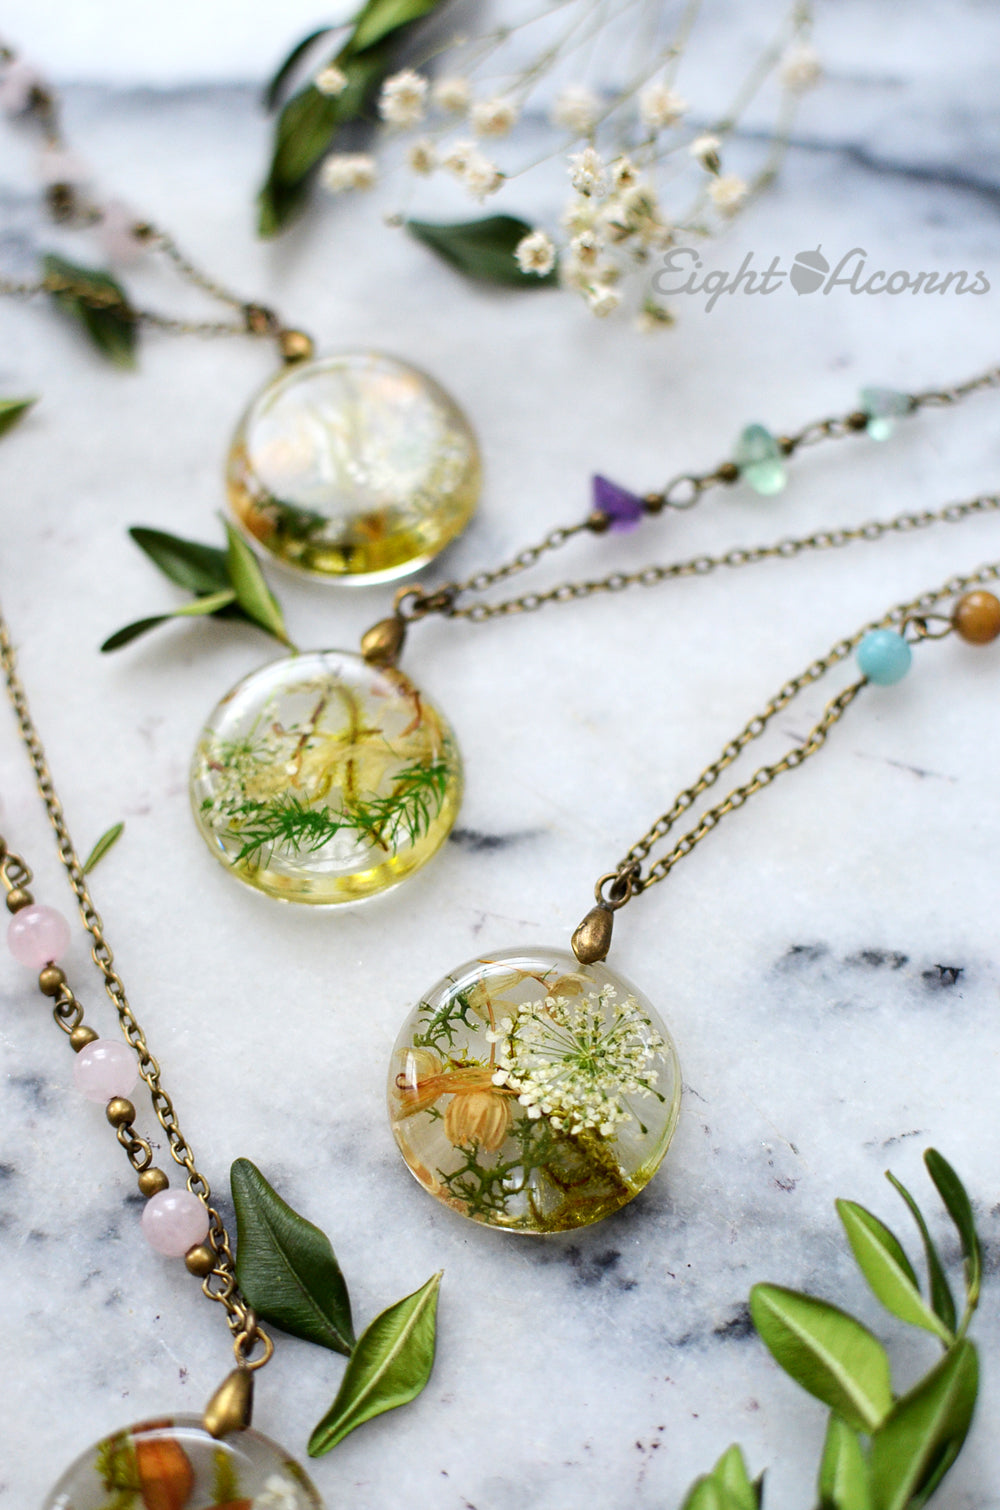 Terrarium Moss necklace – Eight Acorns Floral Preservation